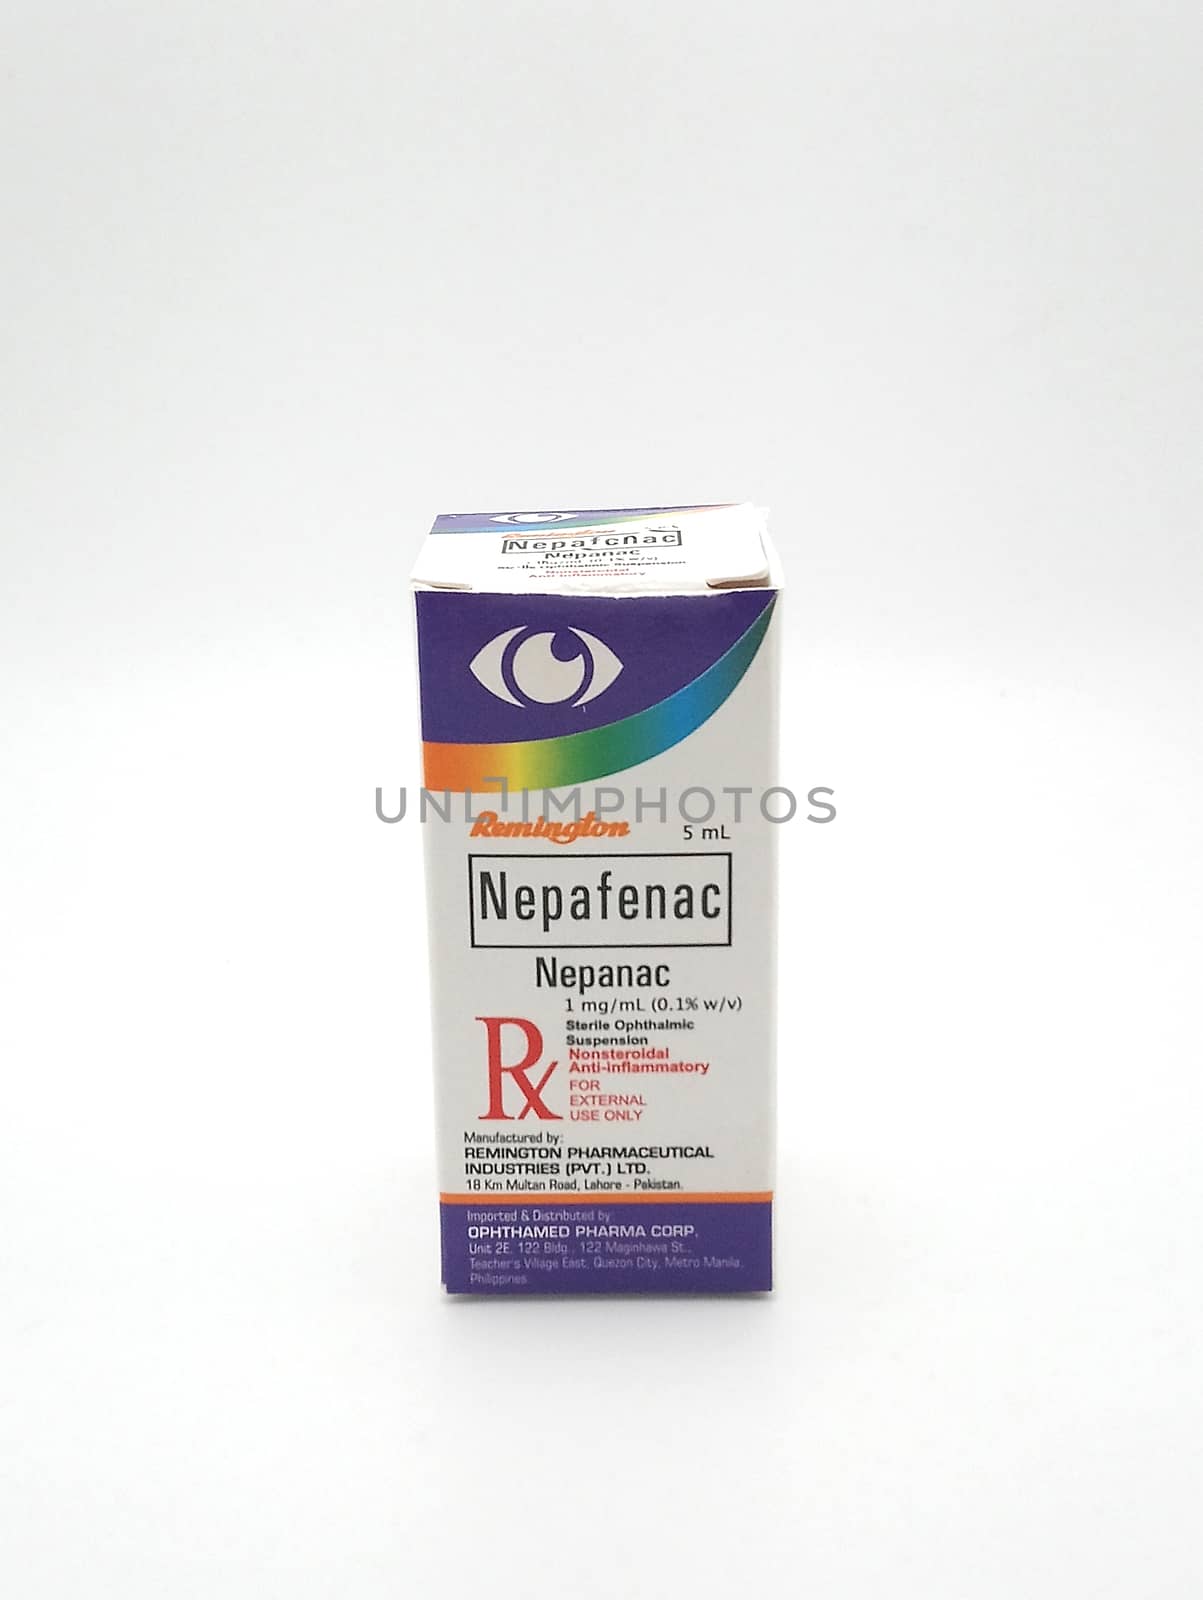 Nepafenac nepanac sterile opthalmic suspension drops box in Mani by imwaltersy